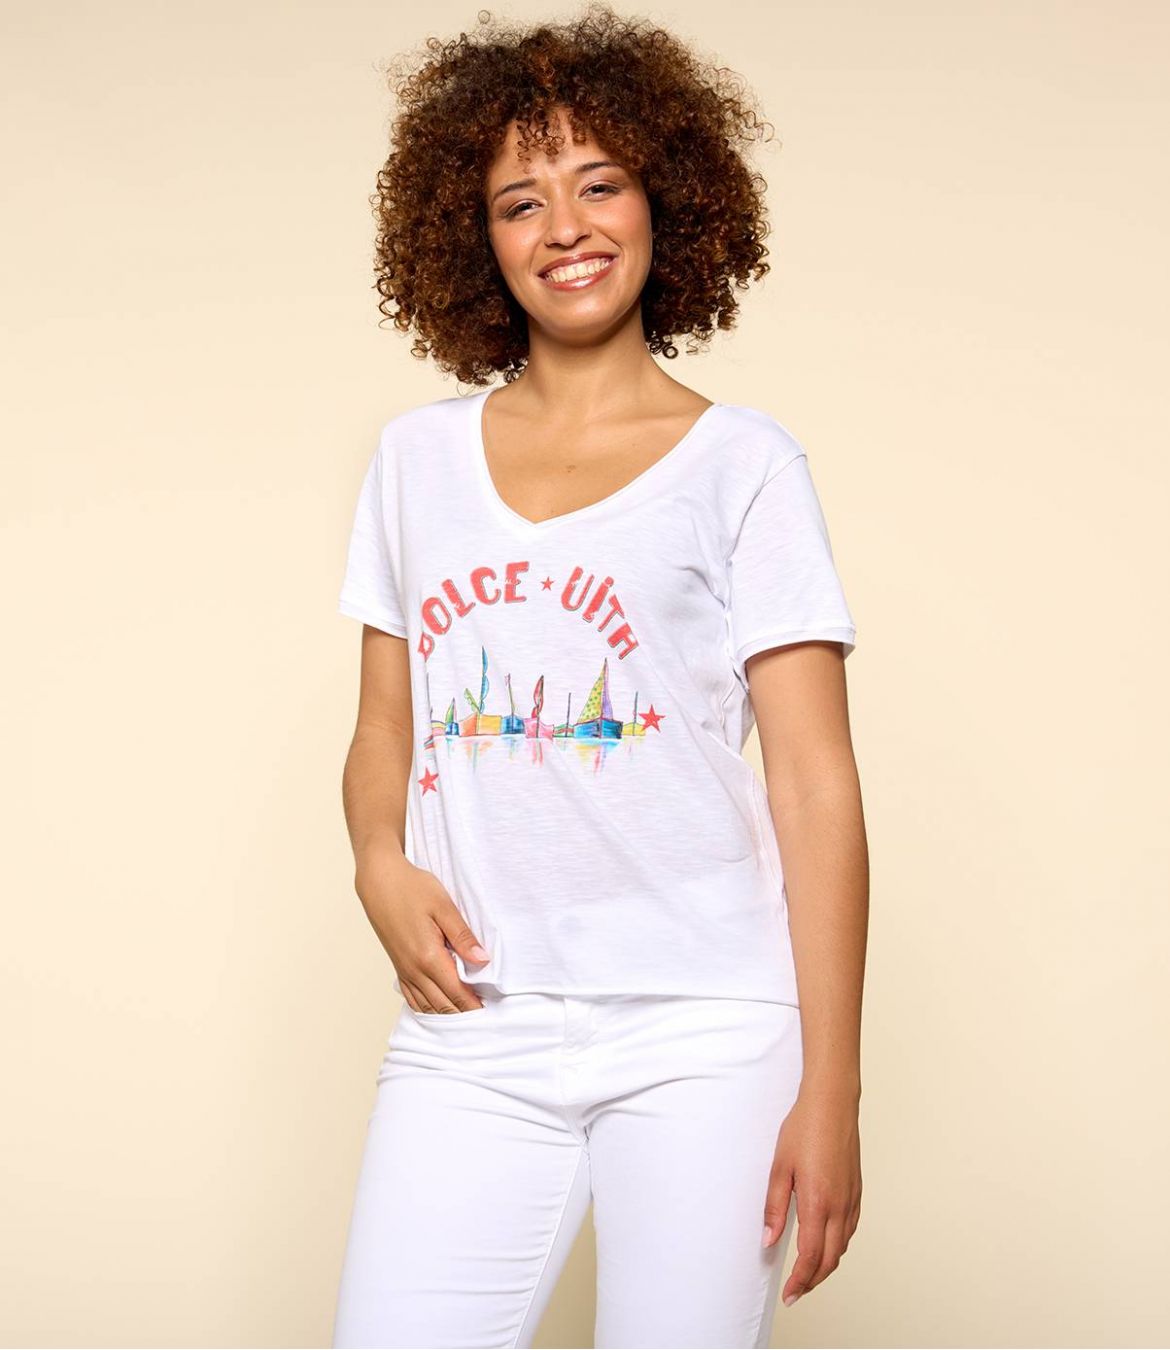 VITA BLANC M-G T-shirt en Coton bio pour Femme - 2